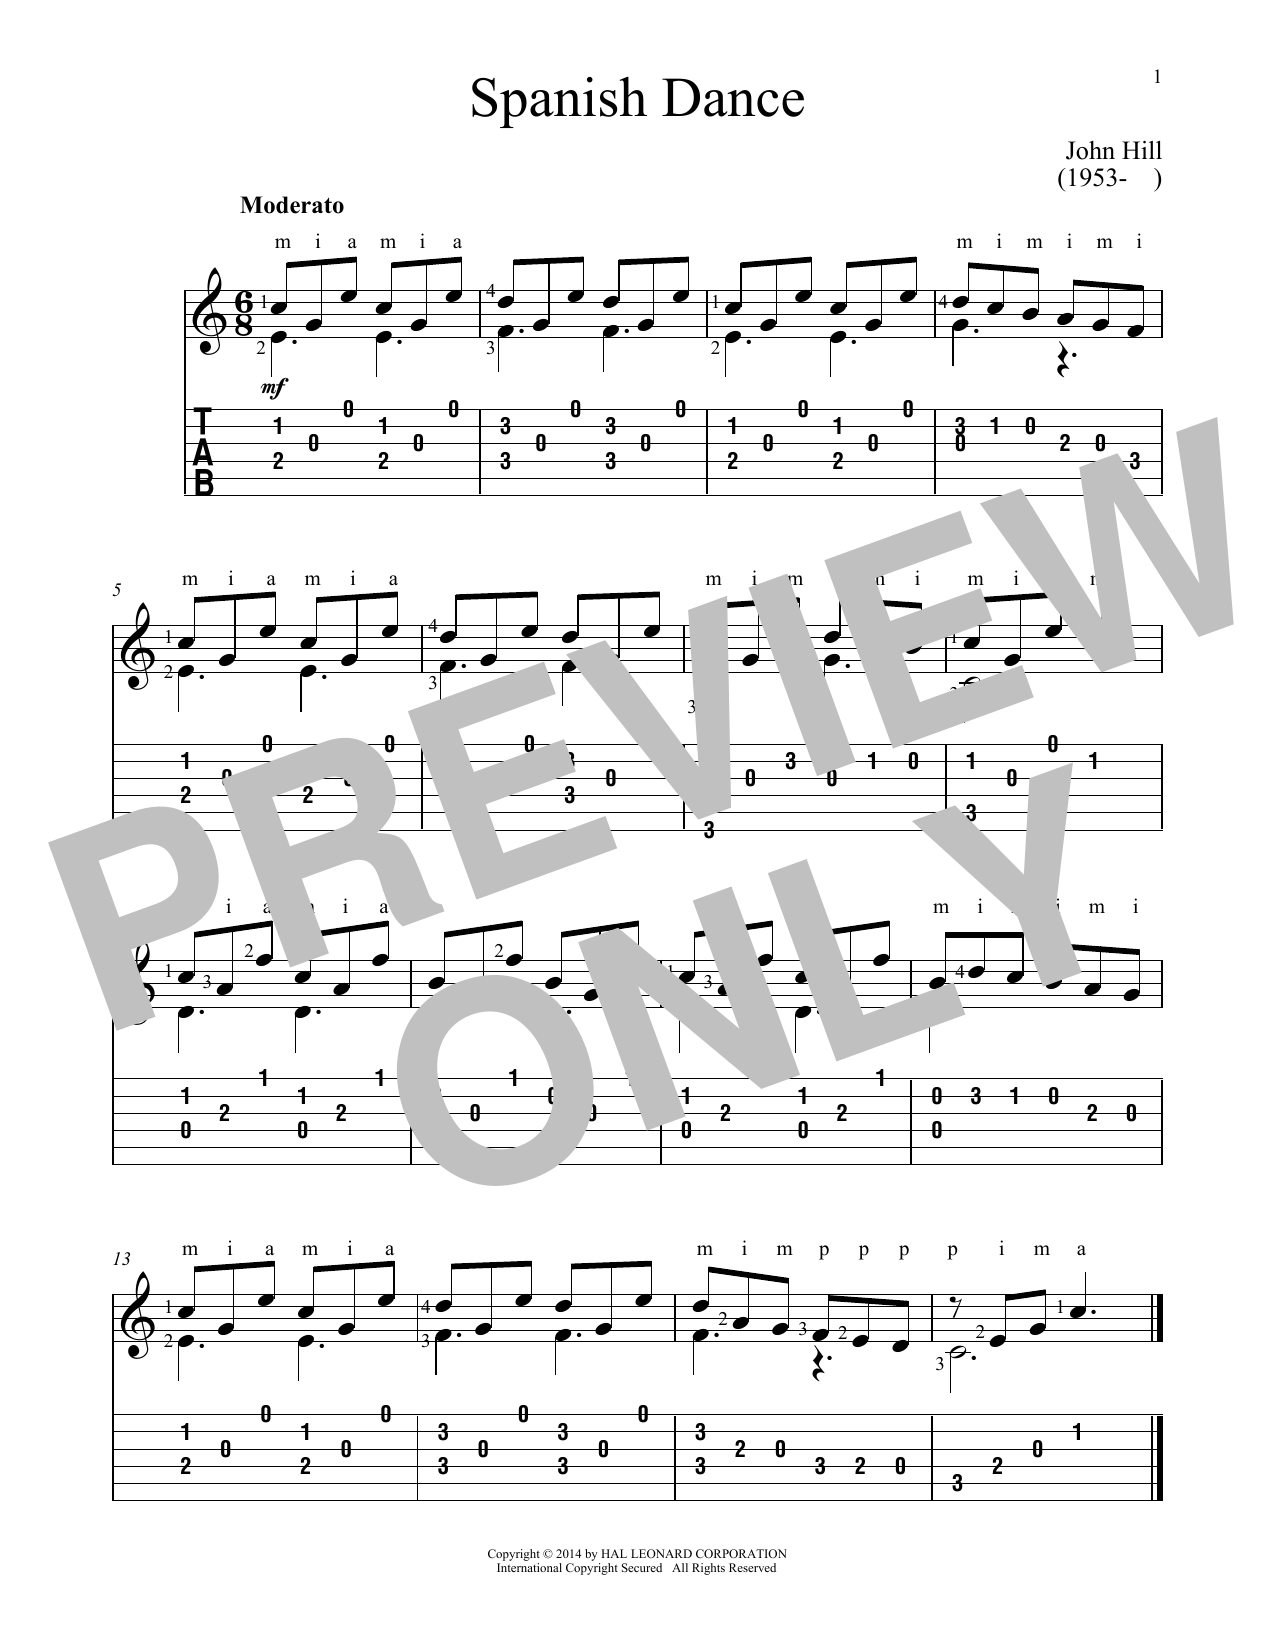 John Hill Spanish Dance Sheet Music Notes & Chords for Guitar Tab - Download or Print PDF